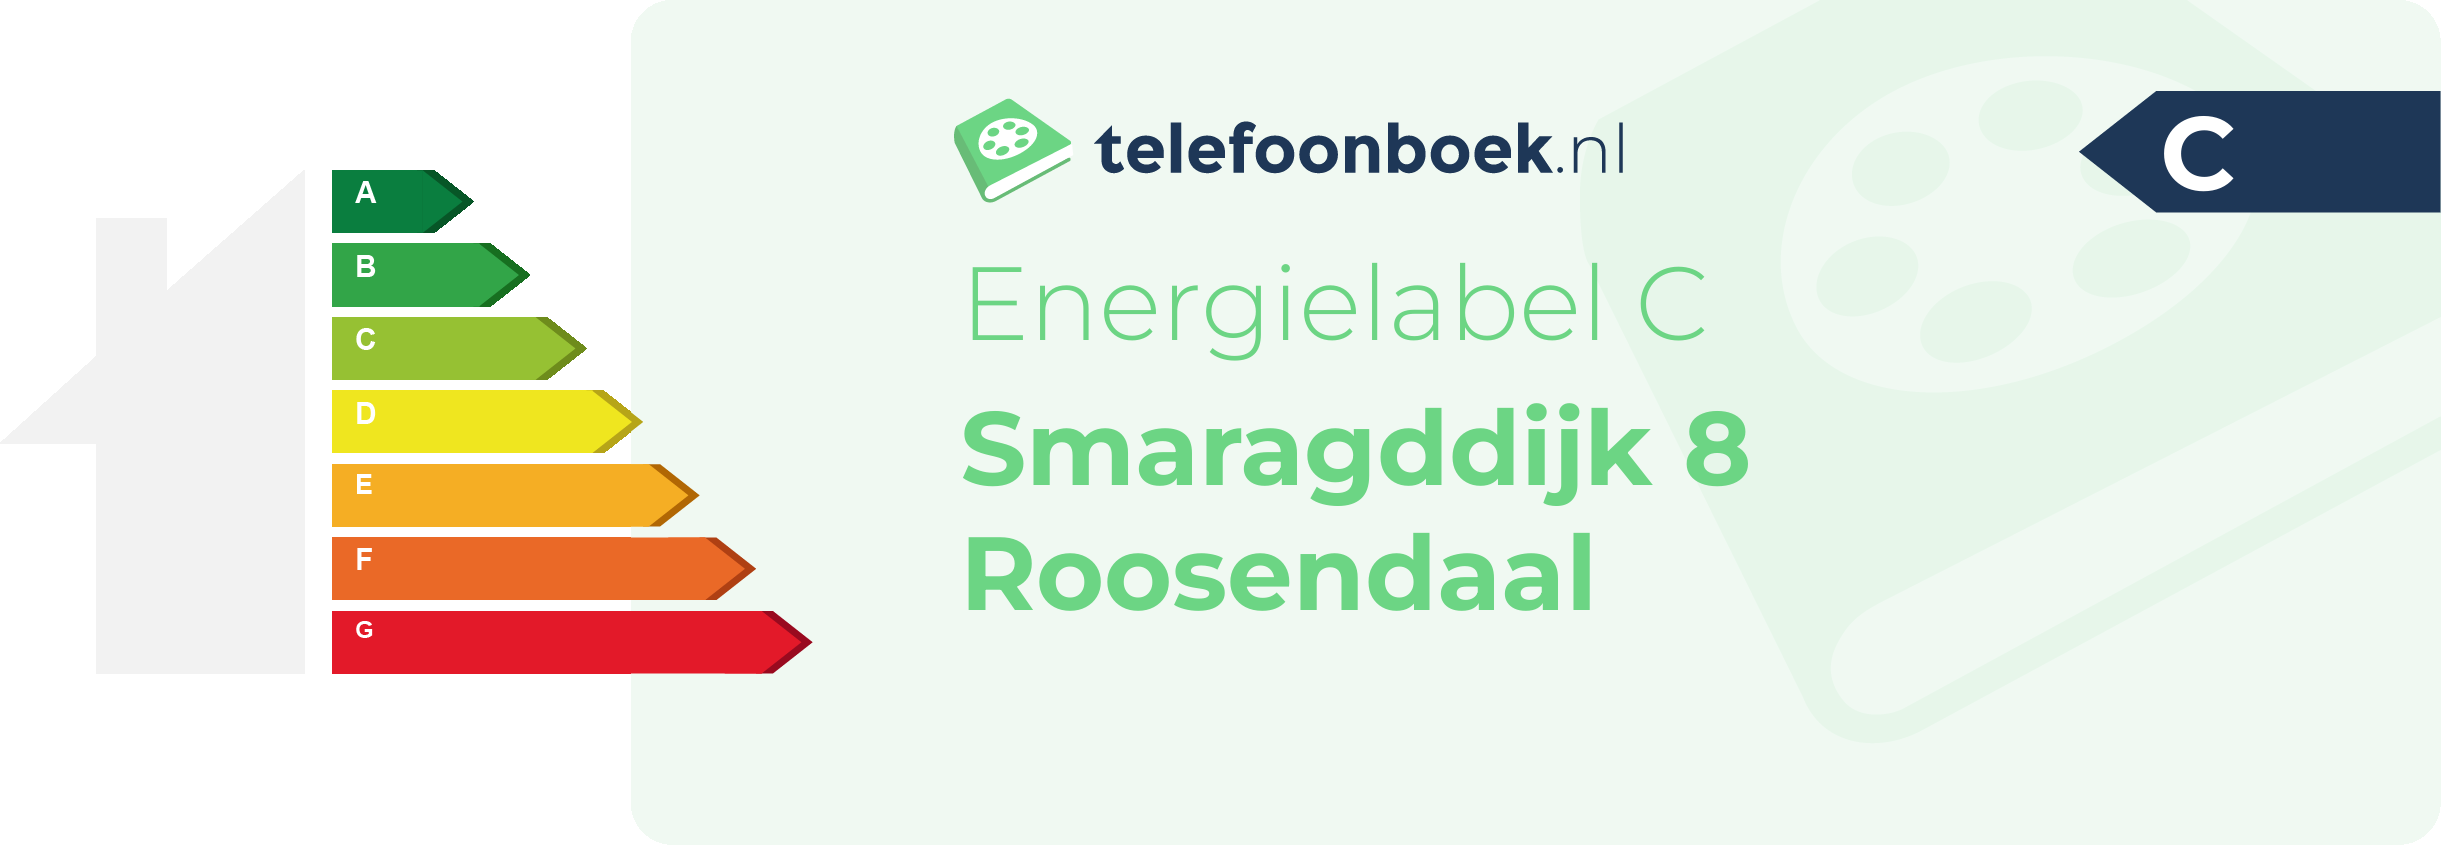 Energielabel Smaragddijk 8 Roosendaal